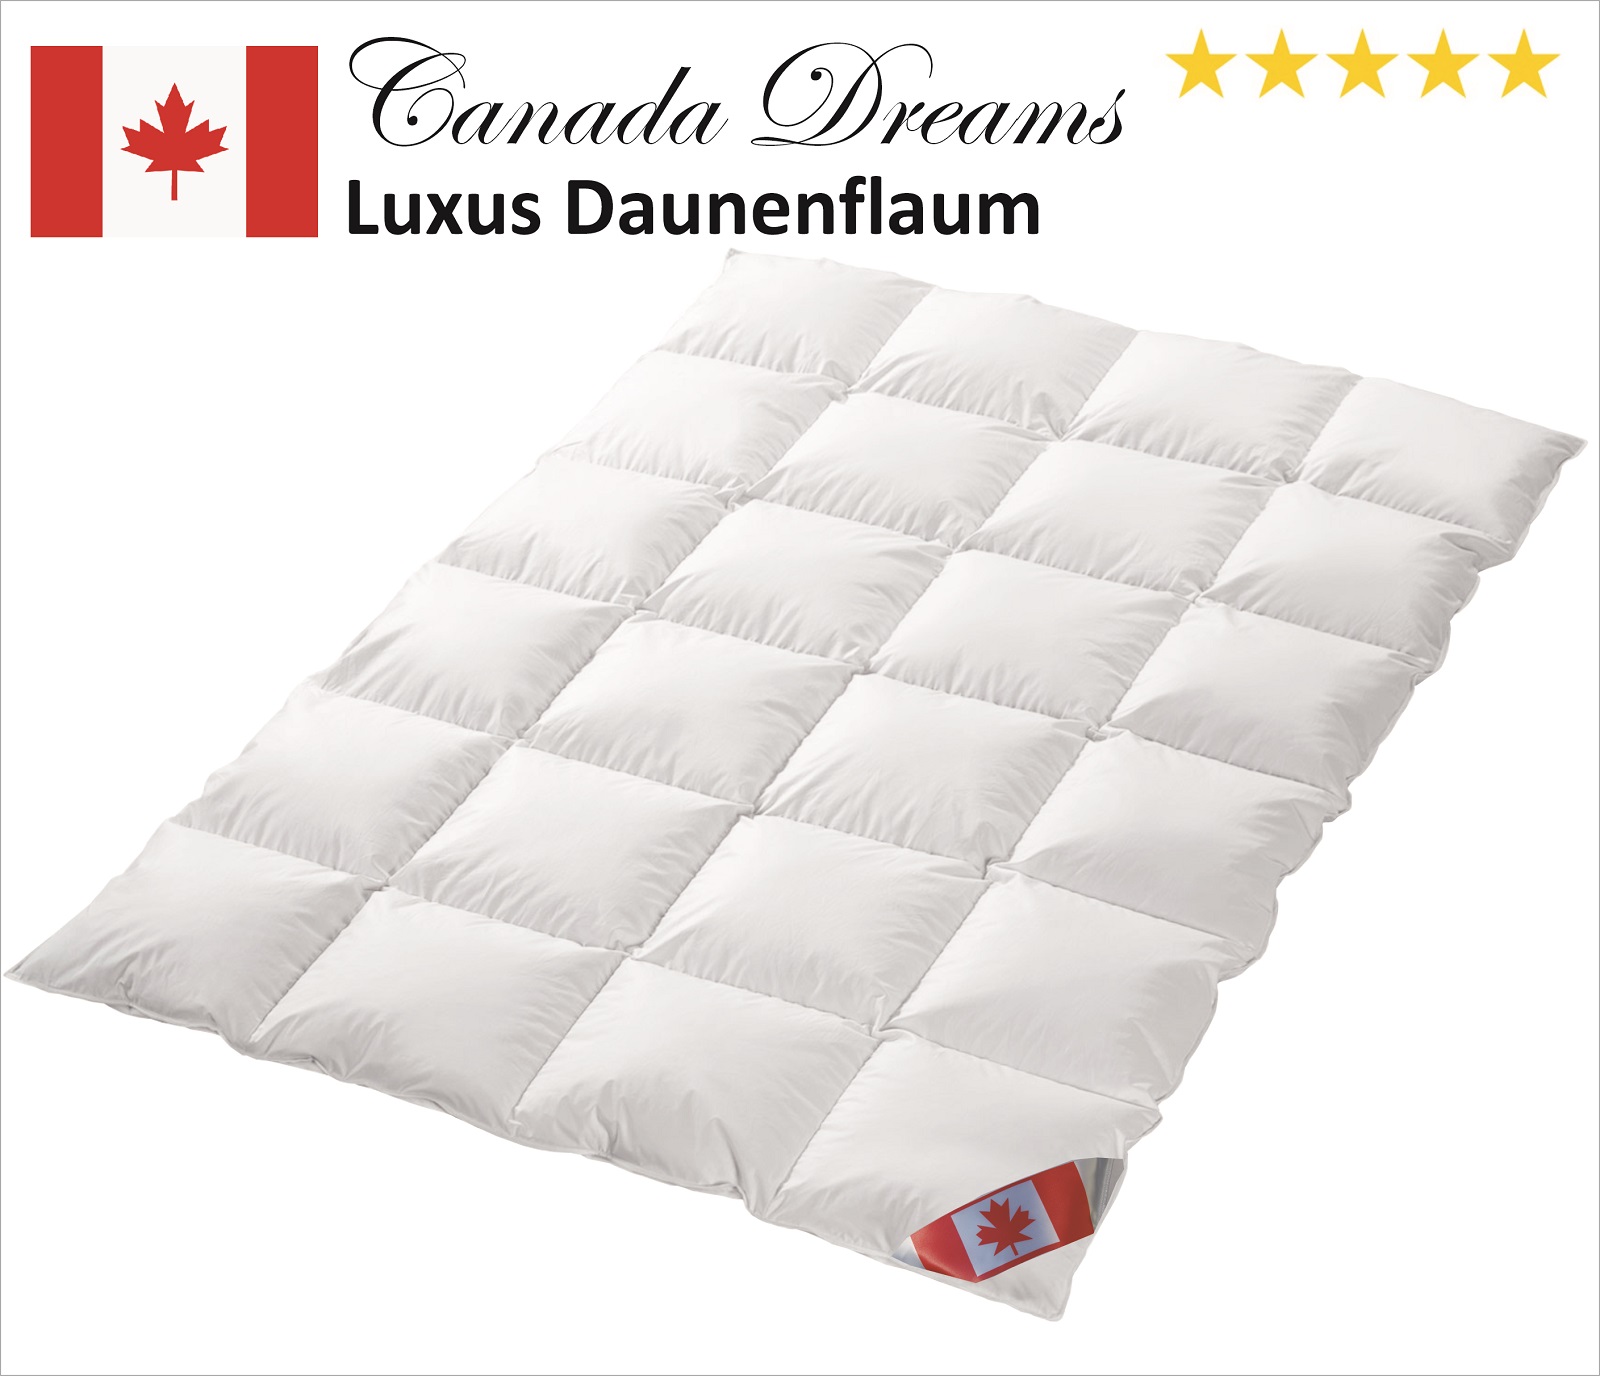 Canada Dreams Luxus Übergangs Daunendecke Daunenflaum CD 2 200x200 cm